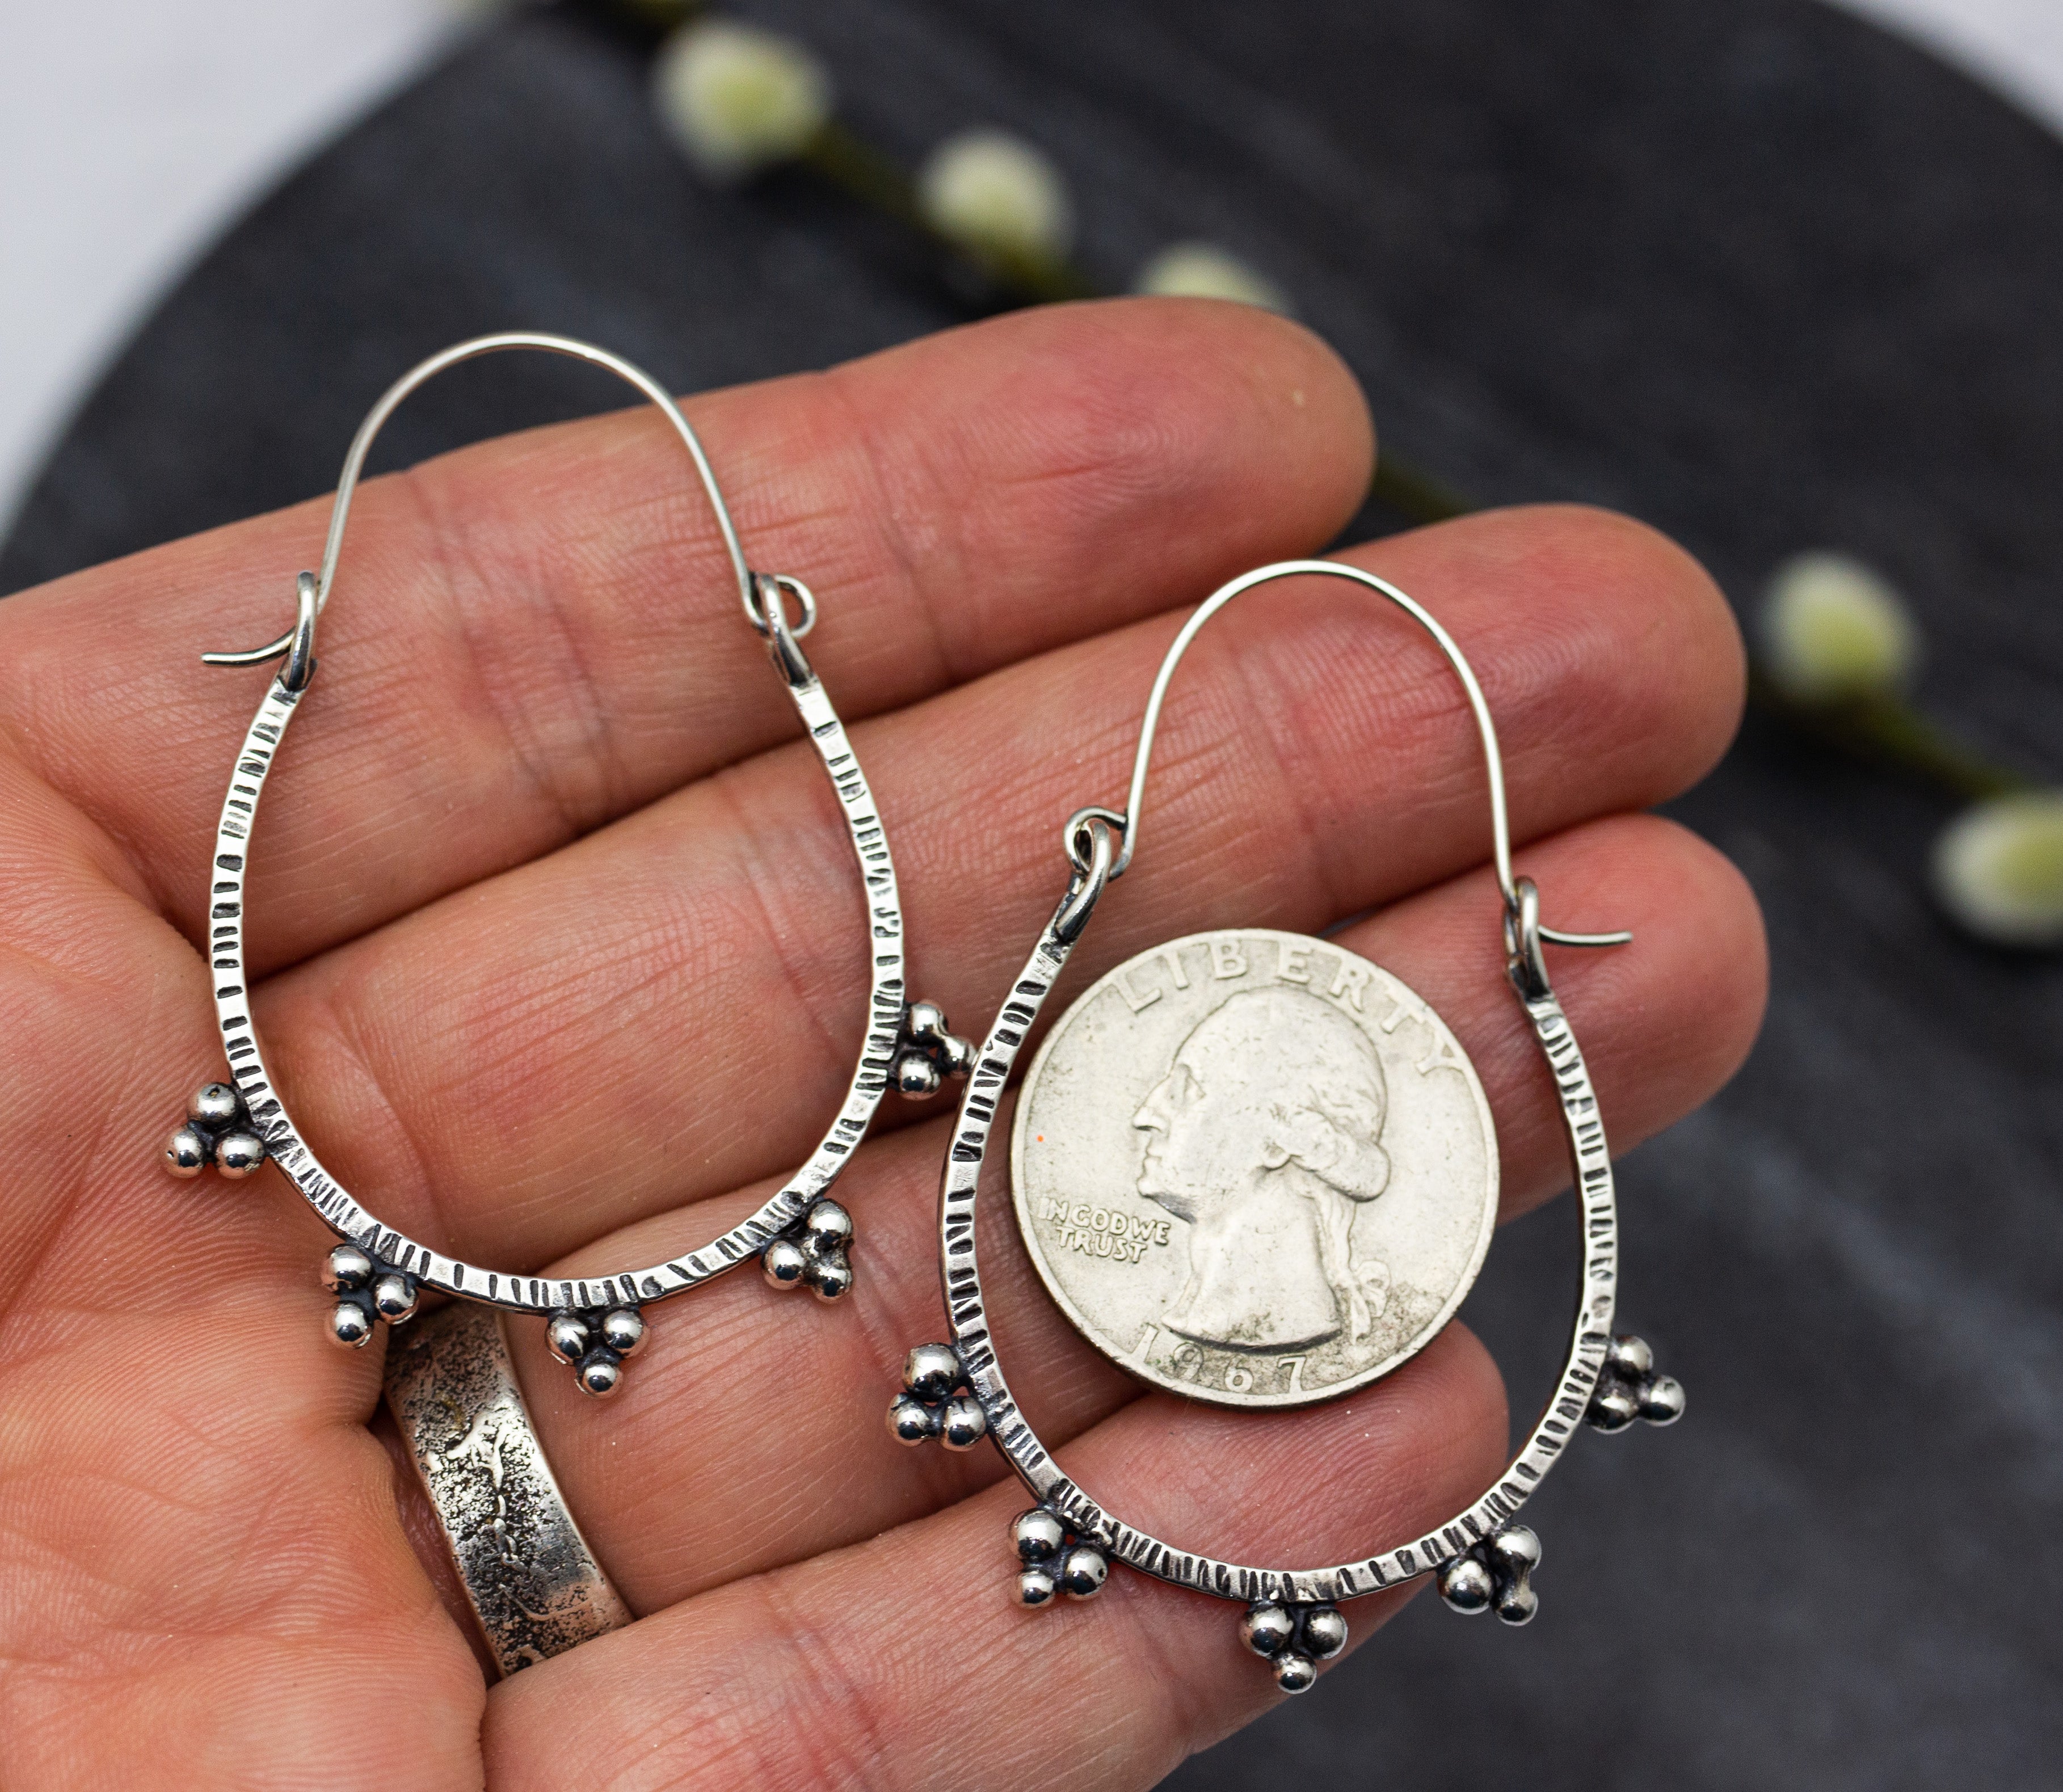 Large Granulated Hoop Earrings in Sterling Silver Made To Order